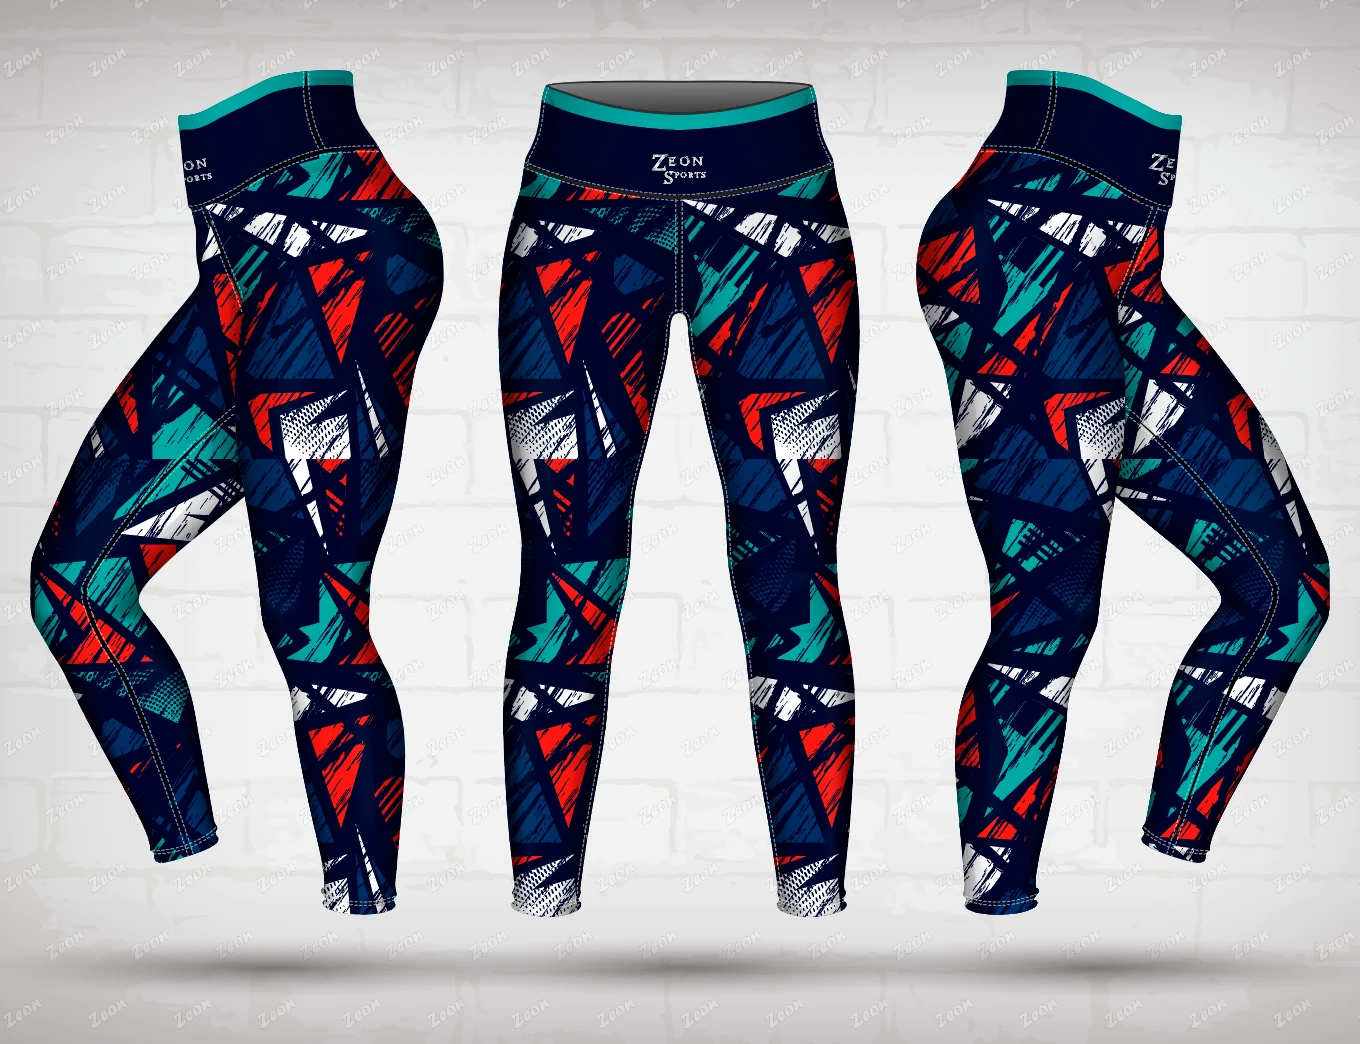 fashionable cool custom geometric patterns sports fitness Yoga leggings pants tights